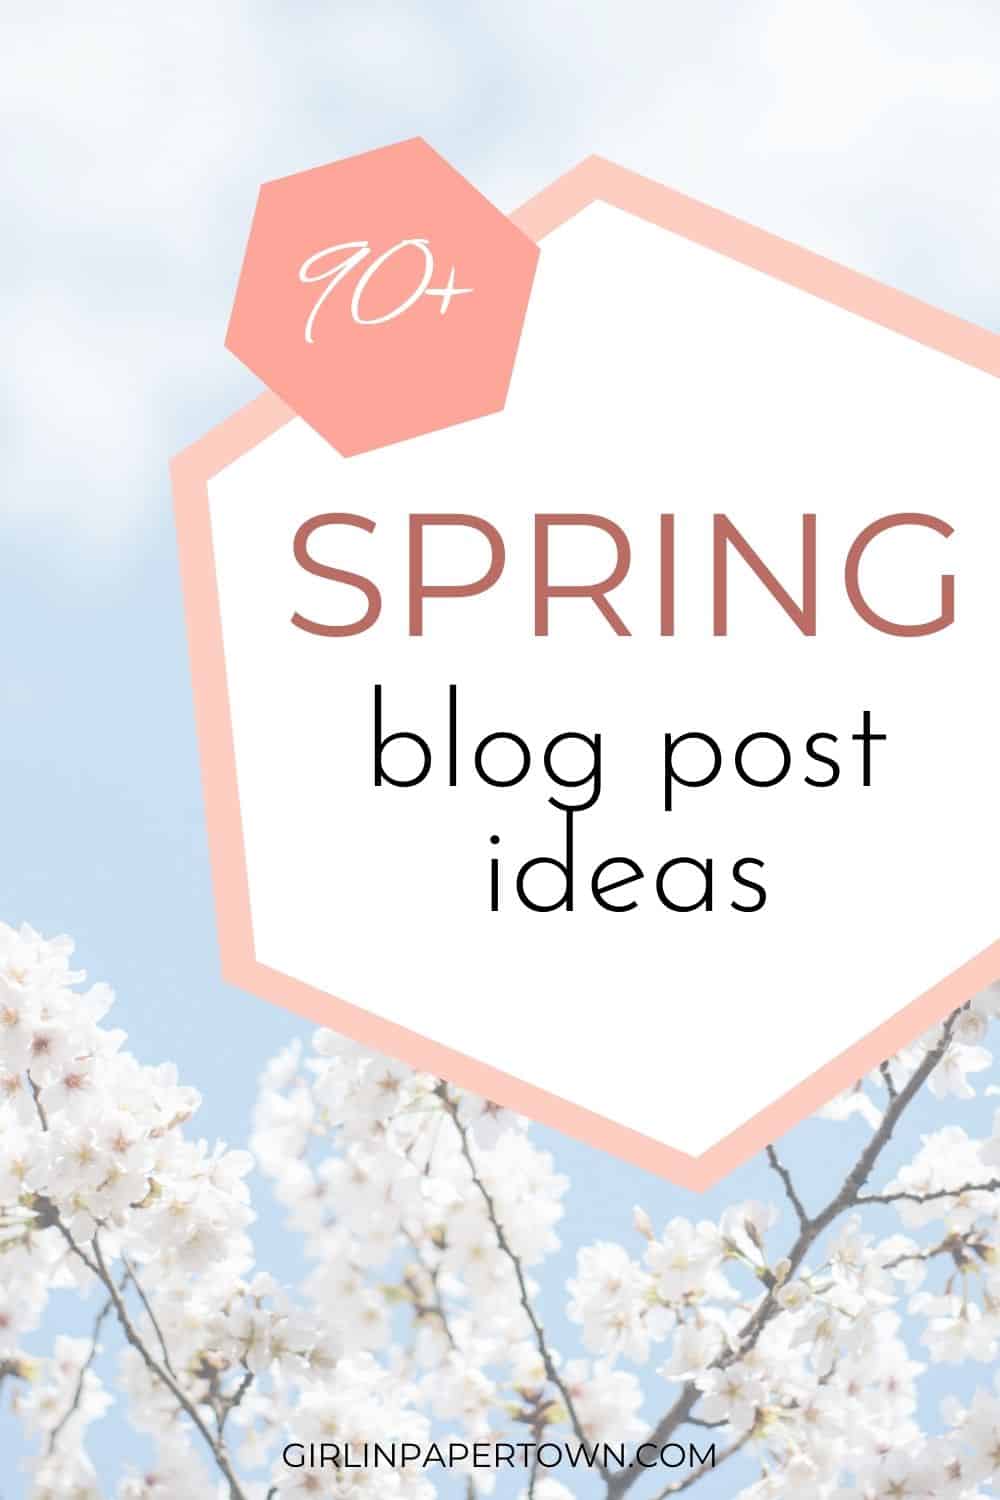 90+ spring blog post ideas pin